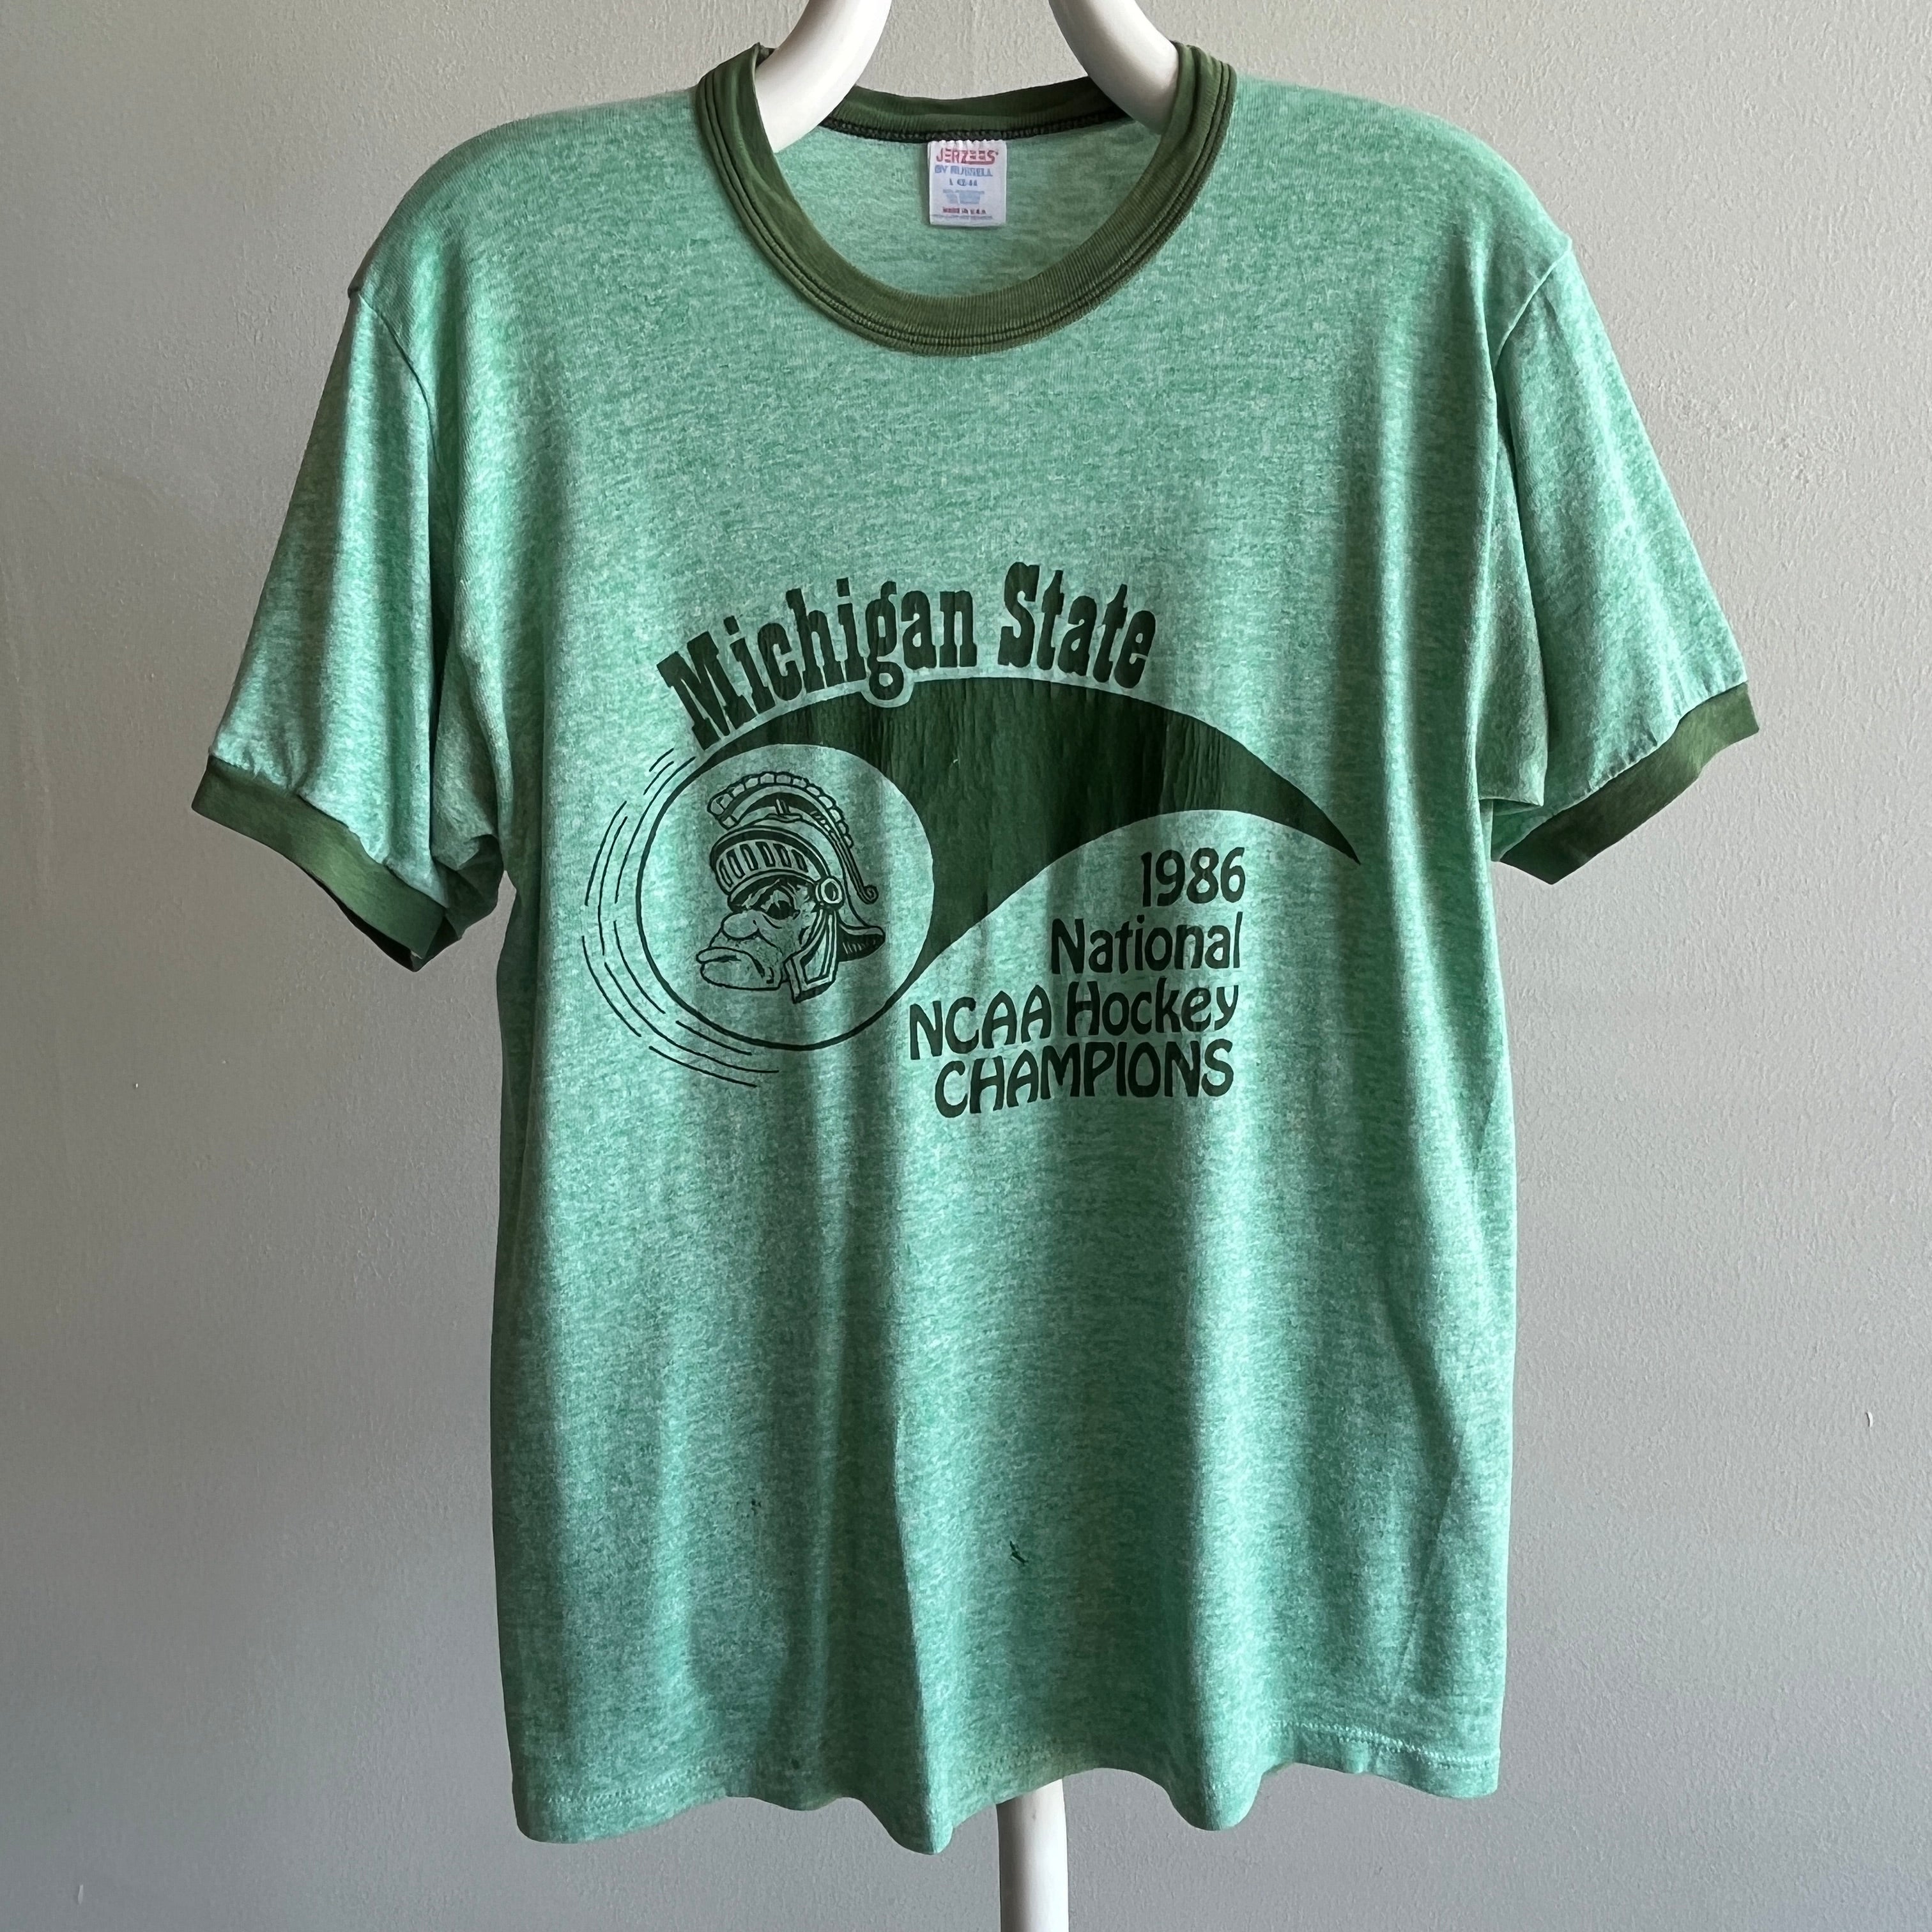 1986 Michigan State National NCAA Hockey Champions Ring T-Shirt